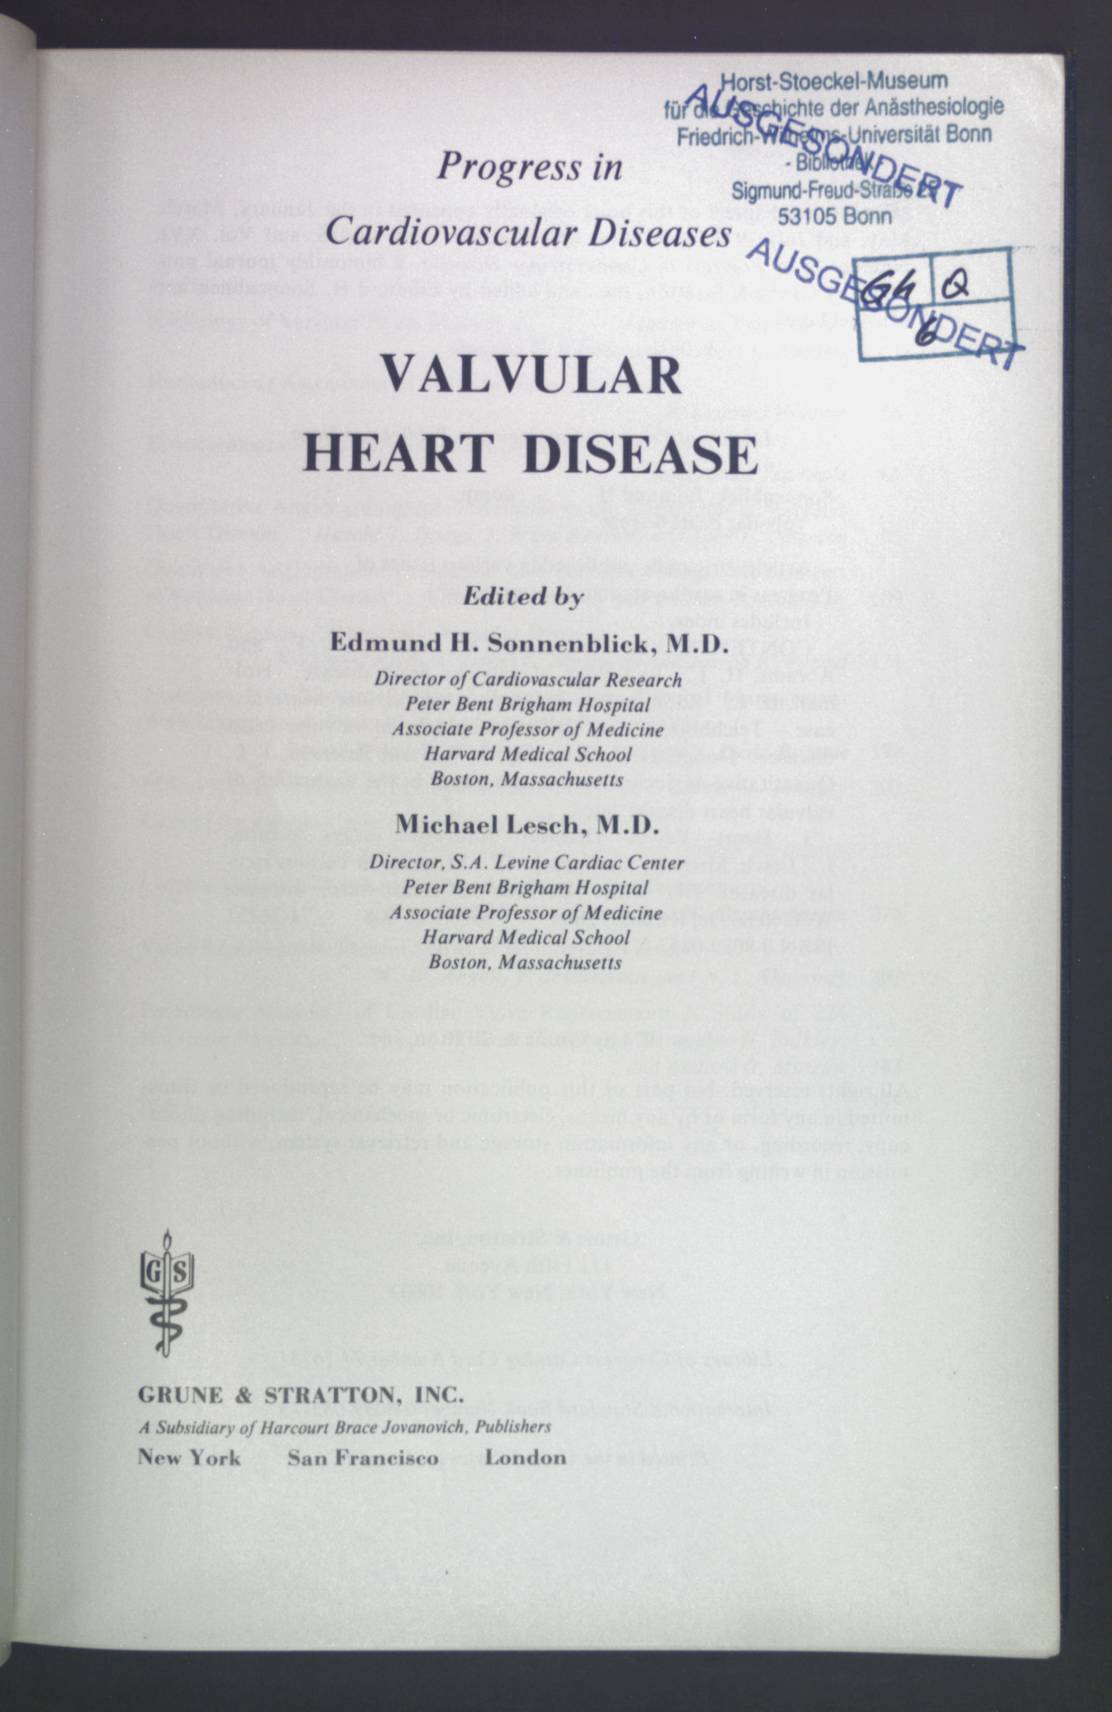 Valvular Heart Disease. Progress in Cardiovascular Diseases. - Sonnenblick, Edmund H. and Michael Lesch